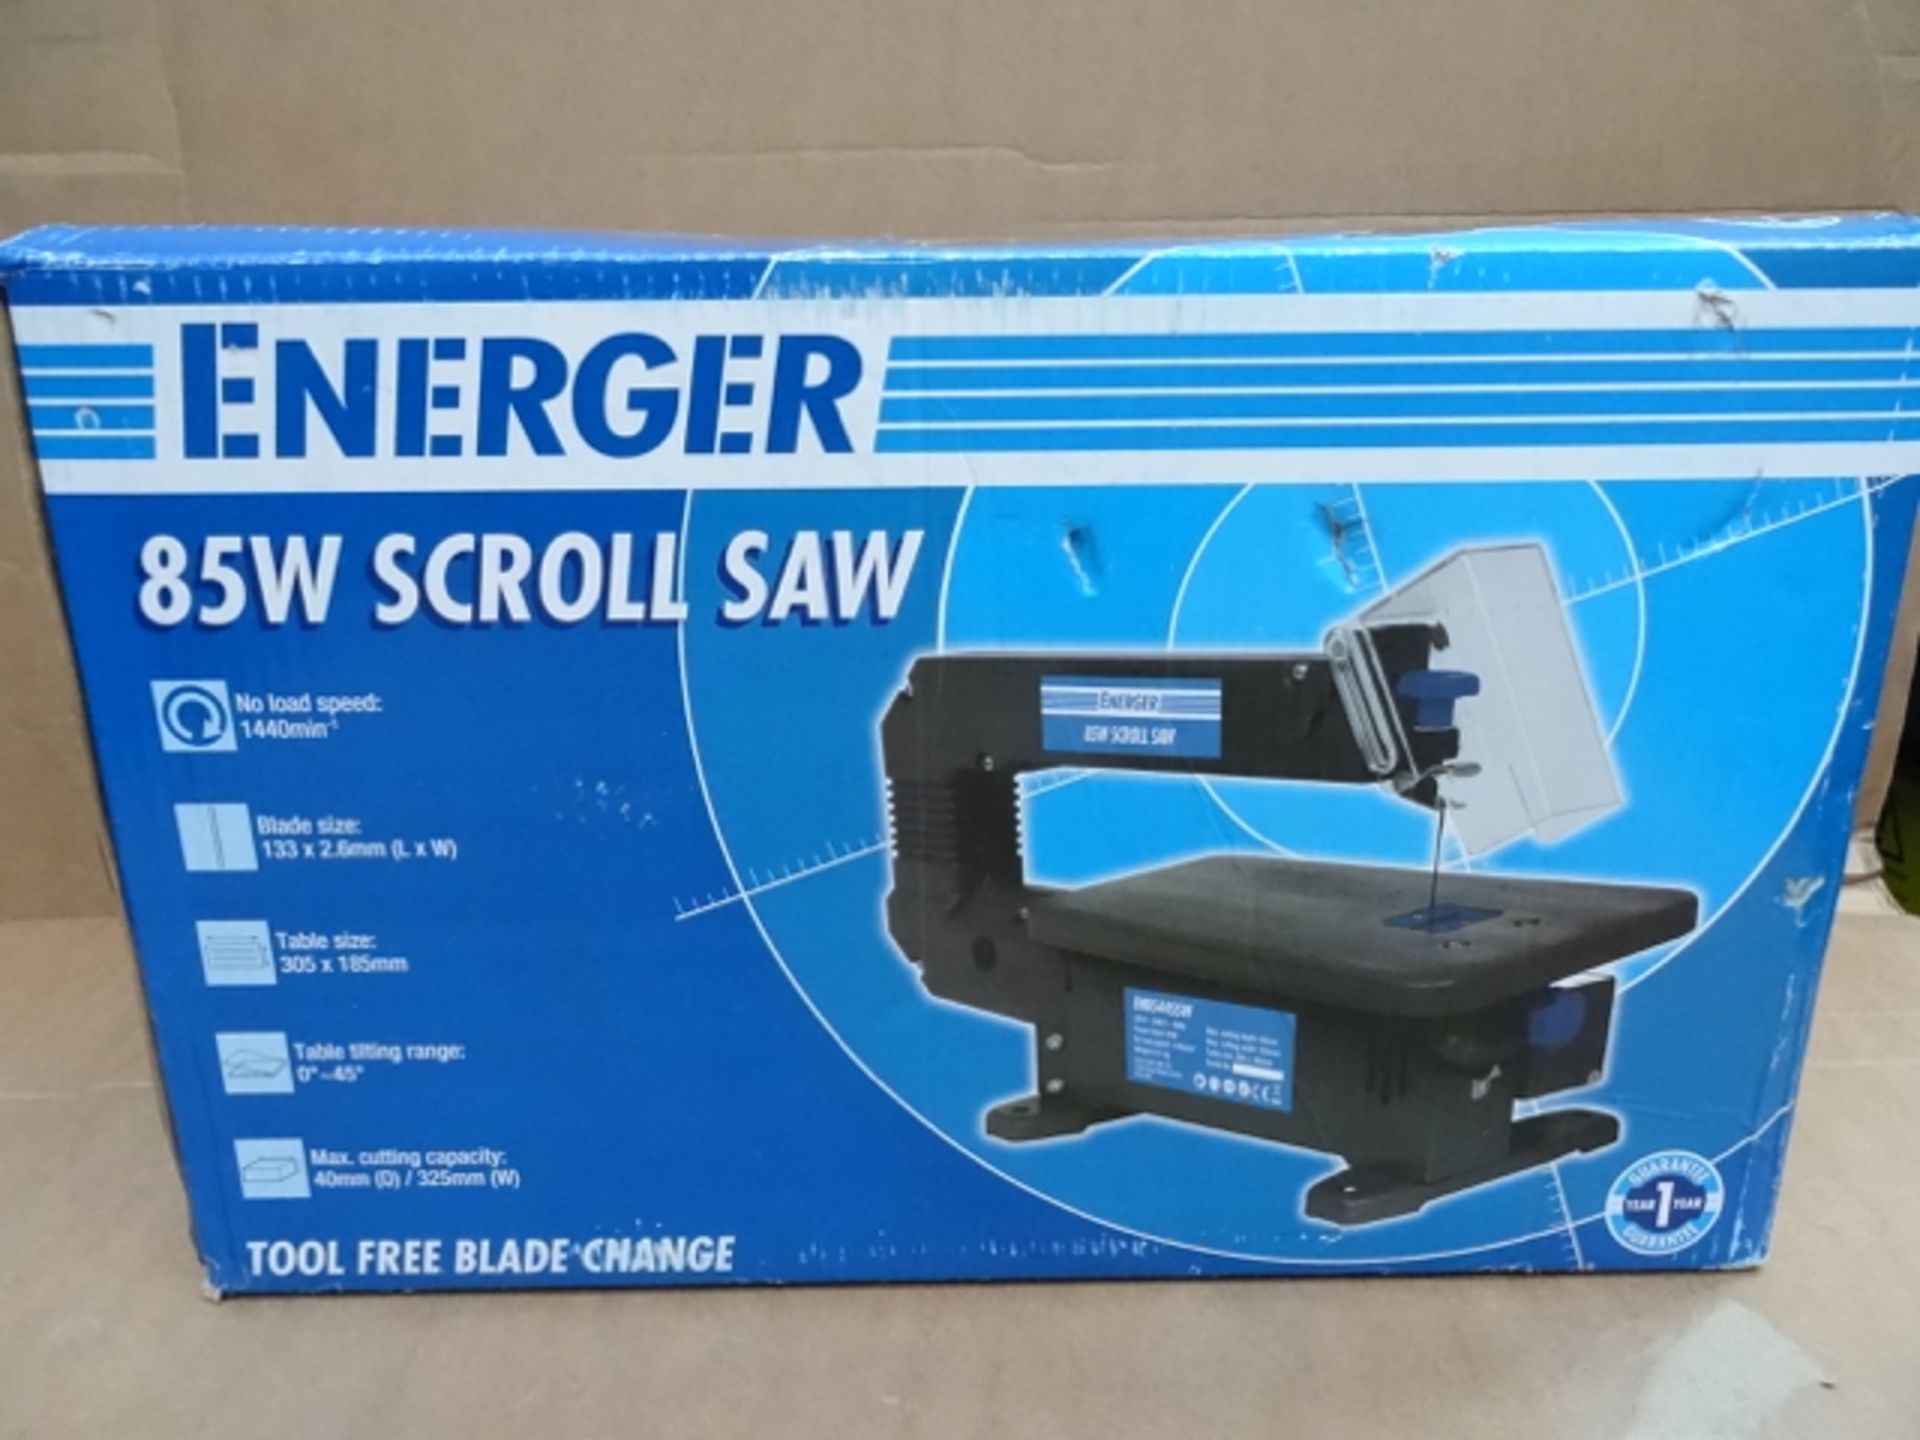 1 x Ernerger 85W Scroll Saw. Blade size: 133 x 2.6mm(L x W) Upto 45 degrees tilting range. Tool free